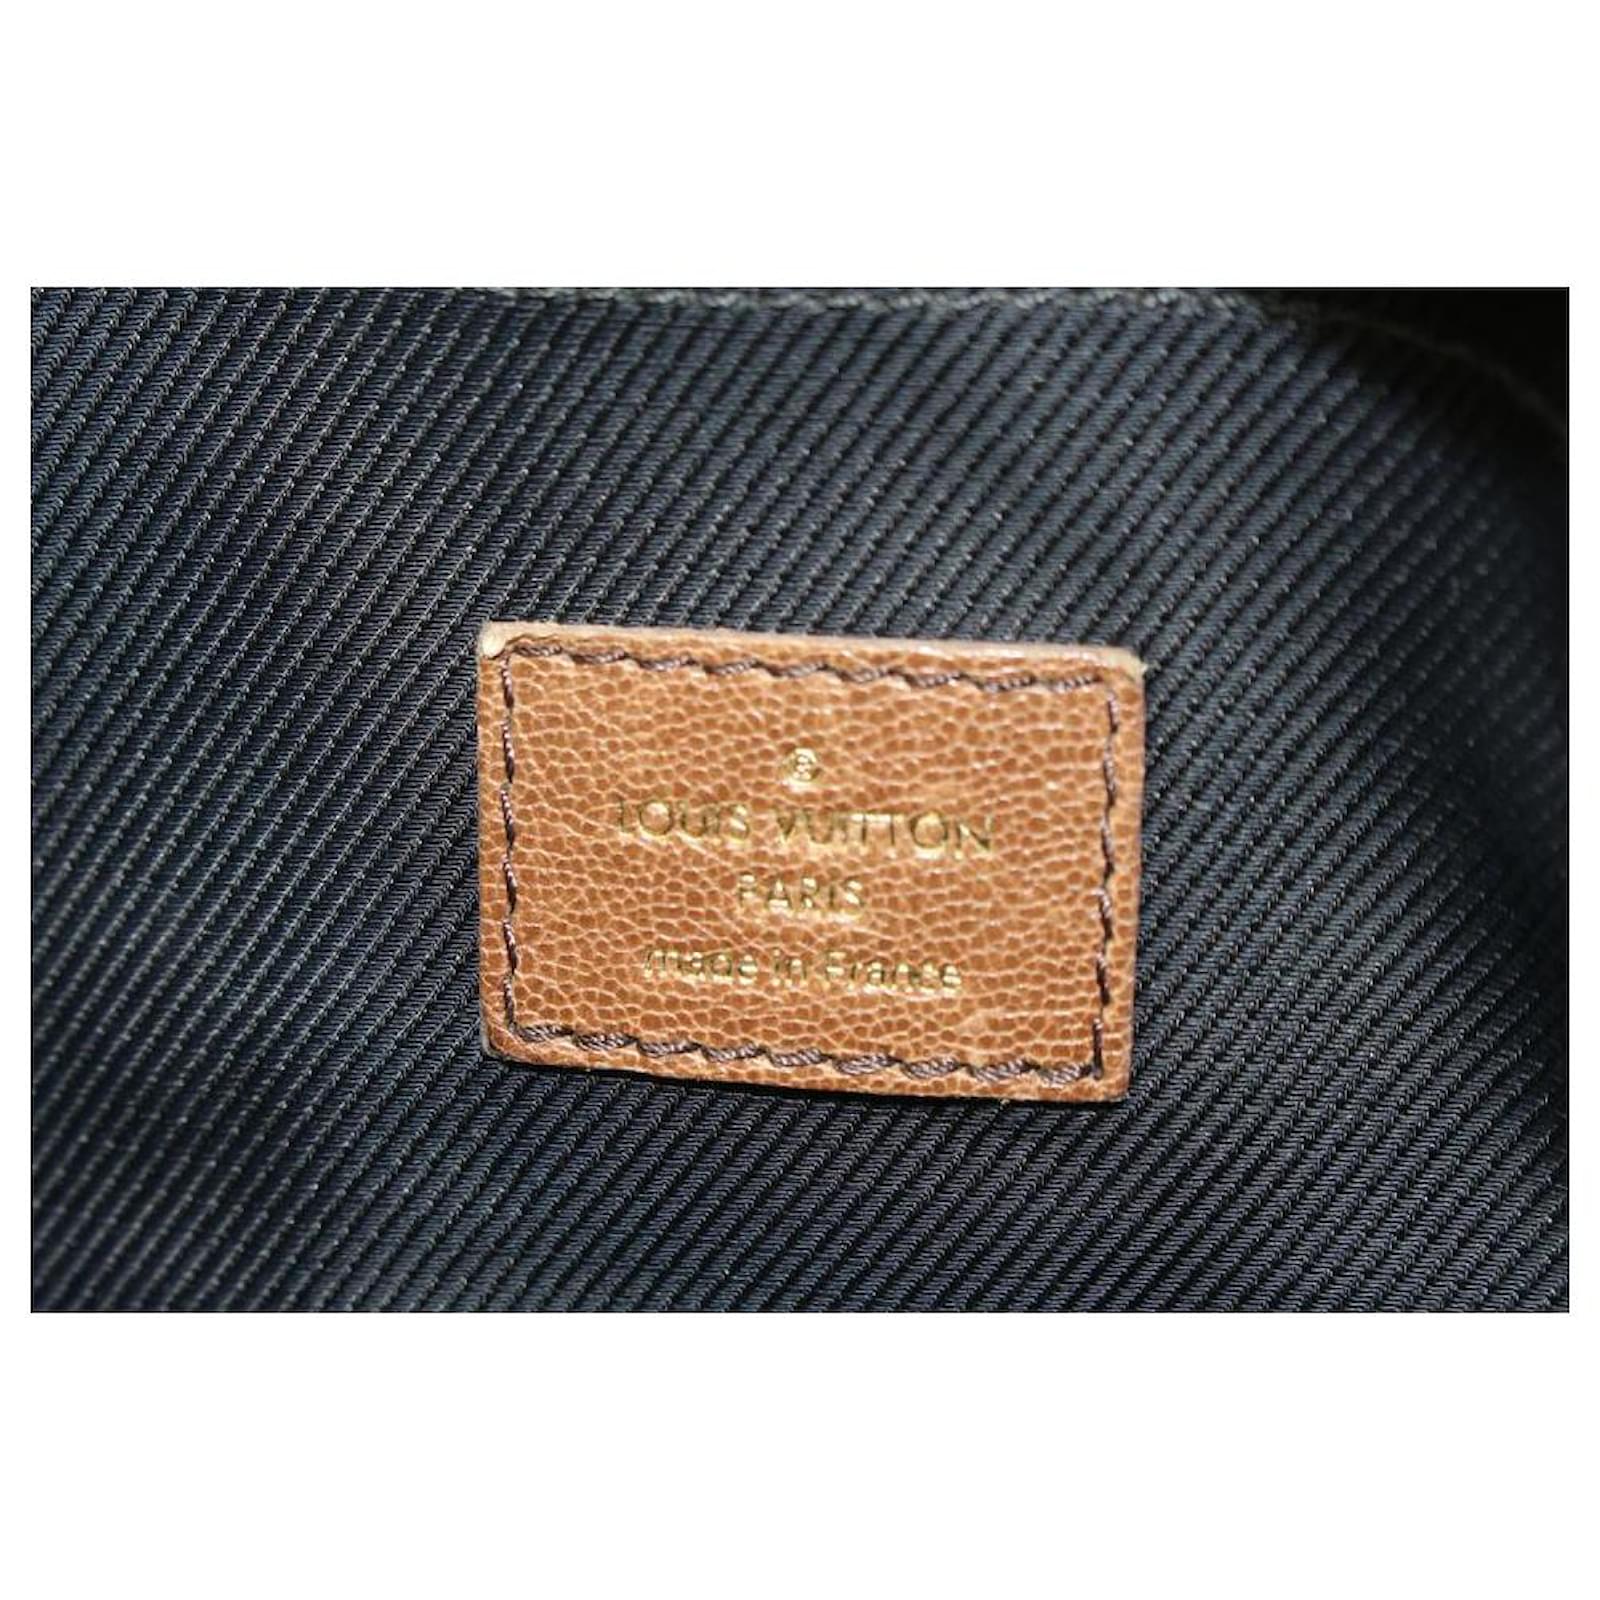 Louis Vuitton Brown Suede x Patent Irene Coco Hobo Bag 67lk322s